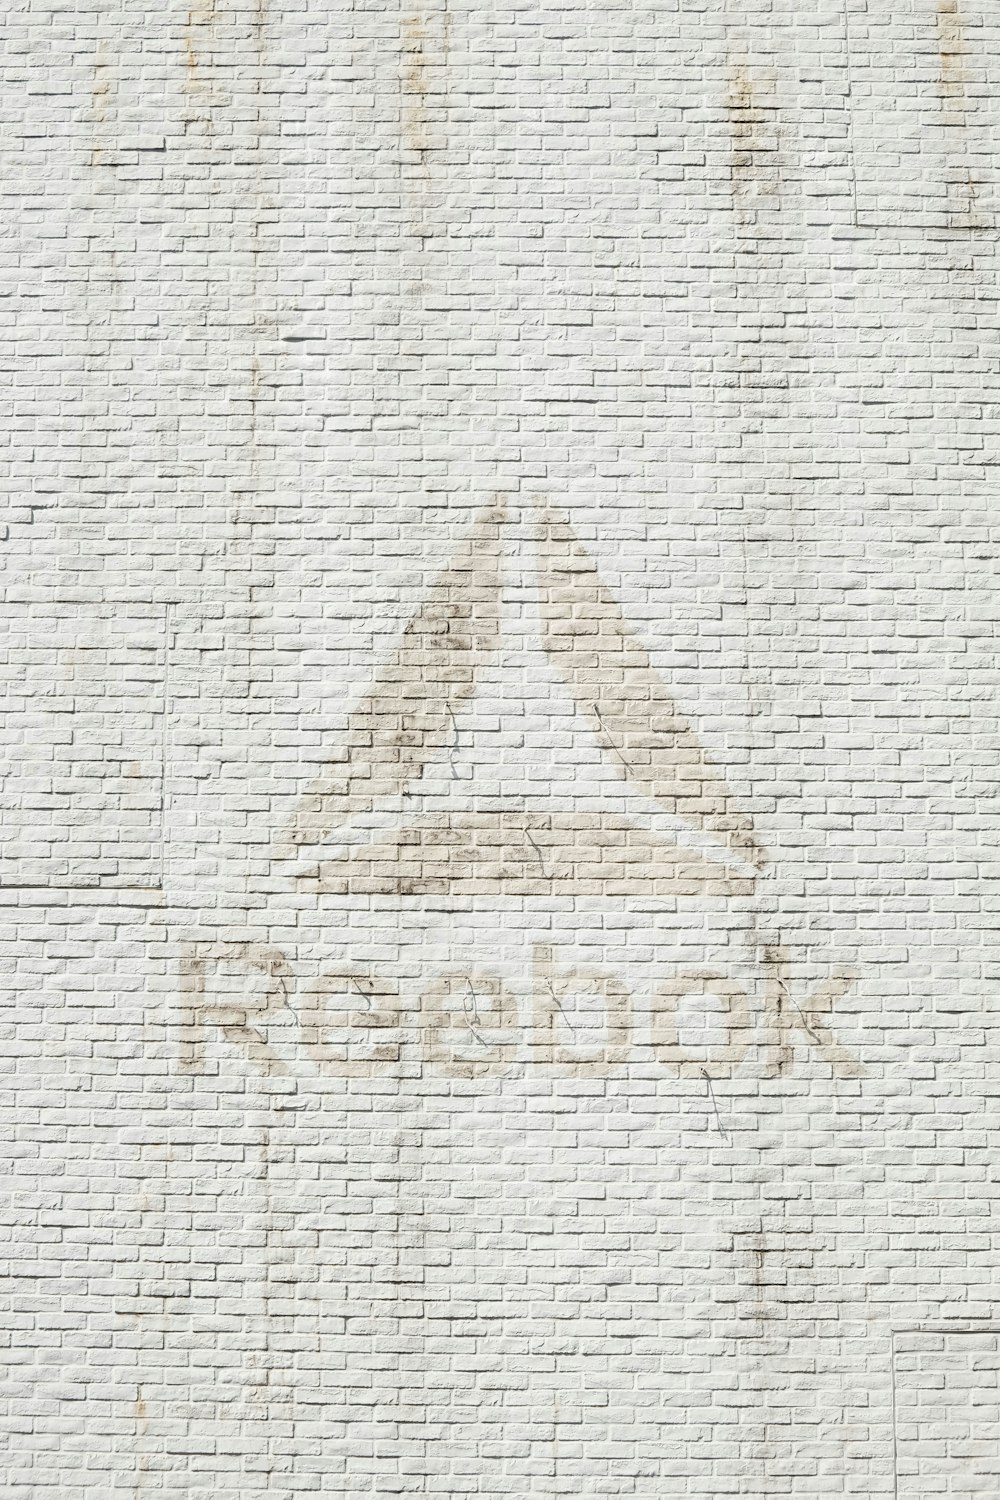 photo en gros plan du logo Reebok sur le mur